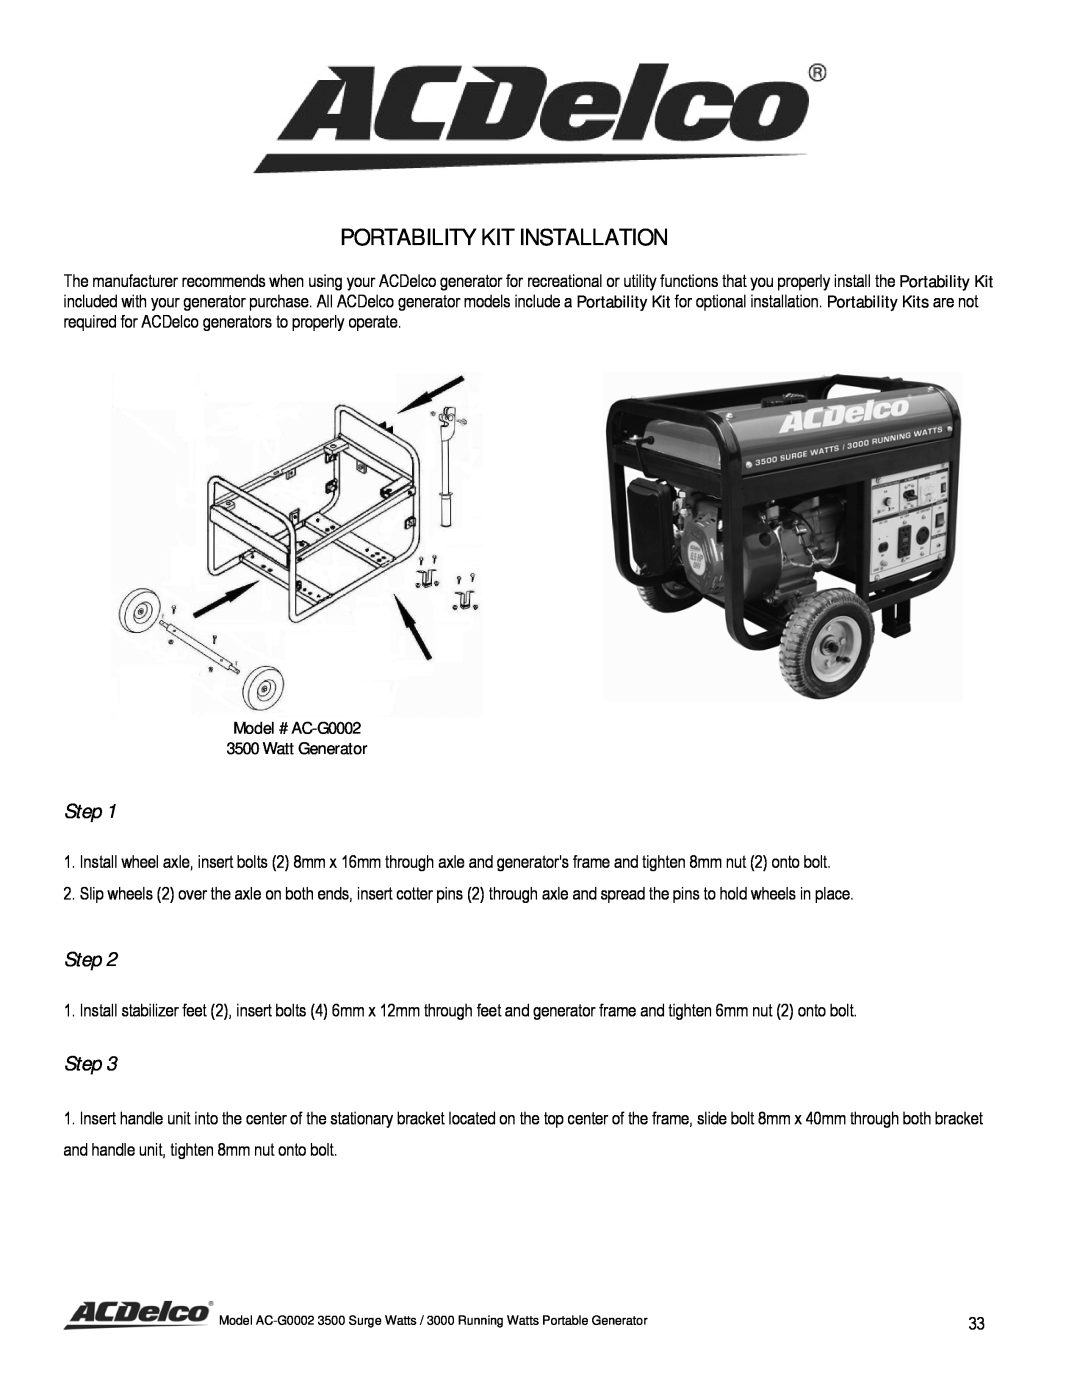 ACDelco instruction manual Portability Kit Installation, Step, Model # AC-G0002 3500 Watt Generator 